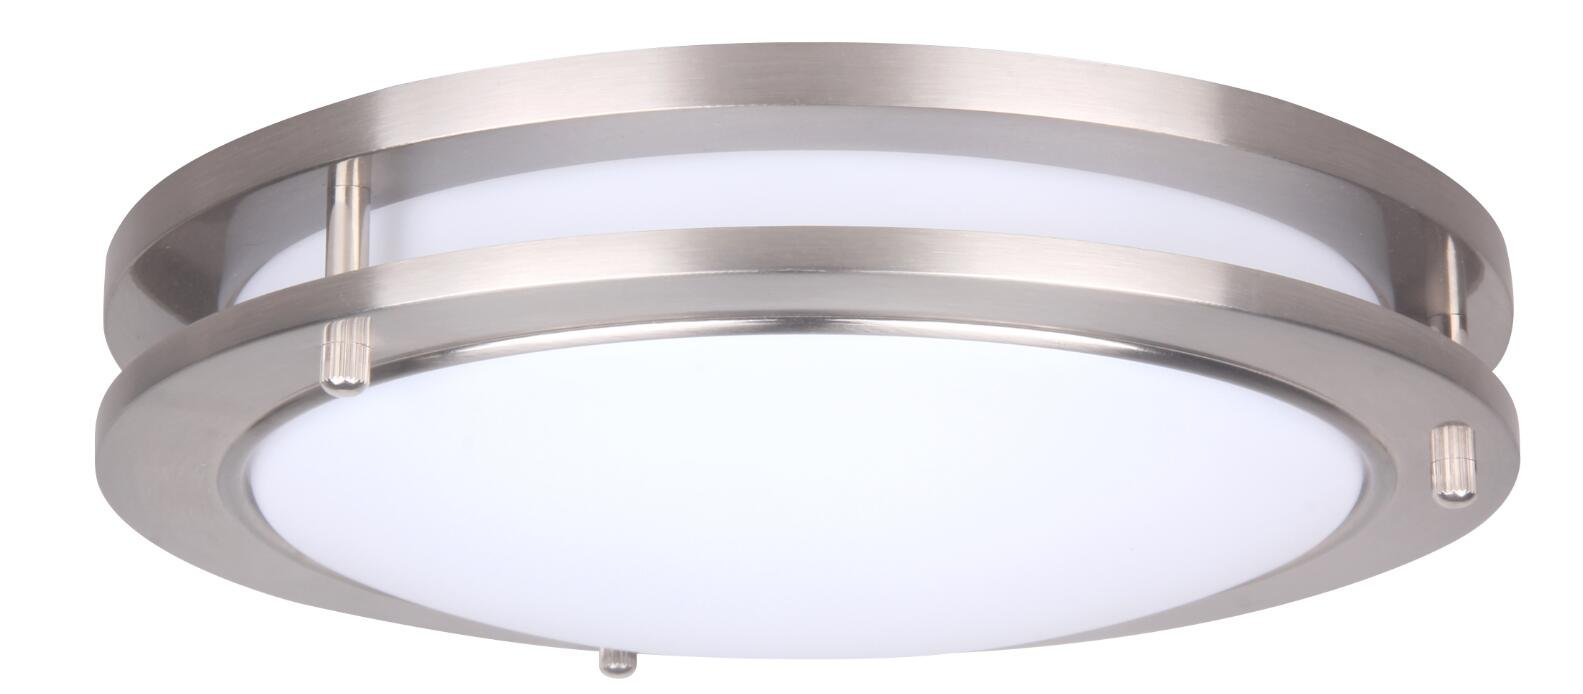 LIT-PaTH 10 Inch Dimmable LED Flush Mount ceiling Lighting Fixture, 14W Replace 100W, 994 Lumen, Satin Nickel Finish, ETL Qualif